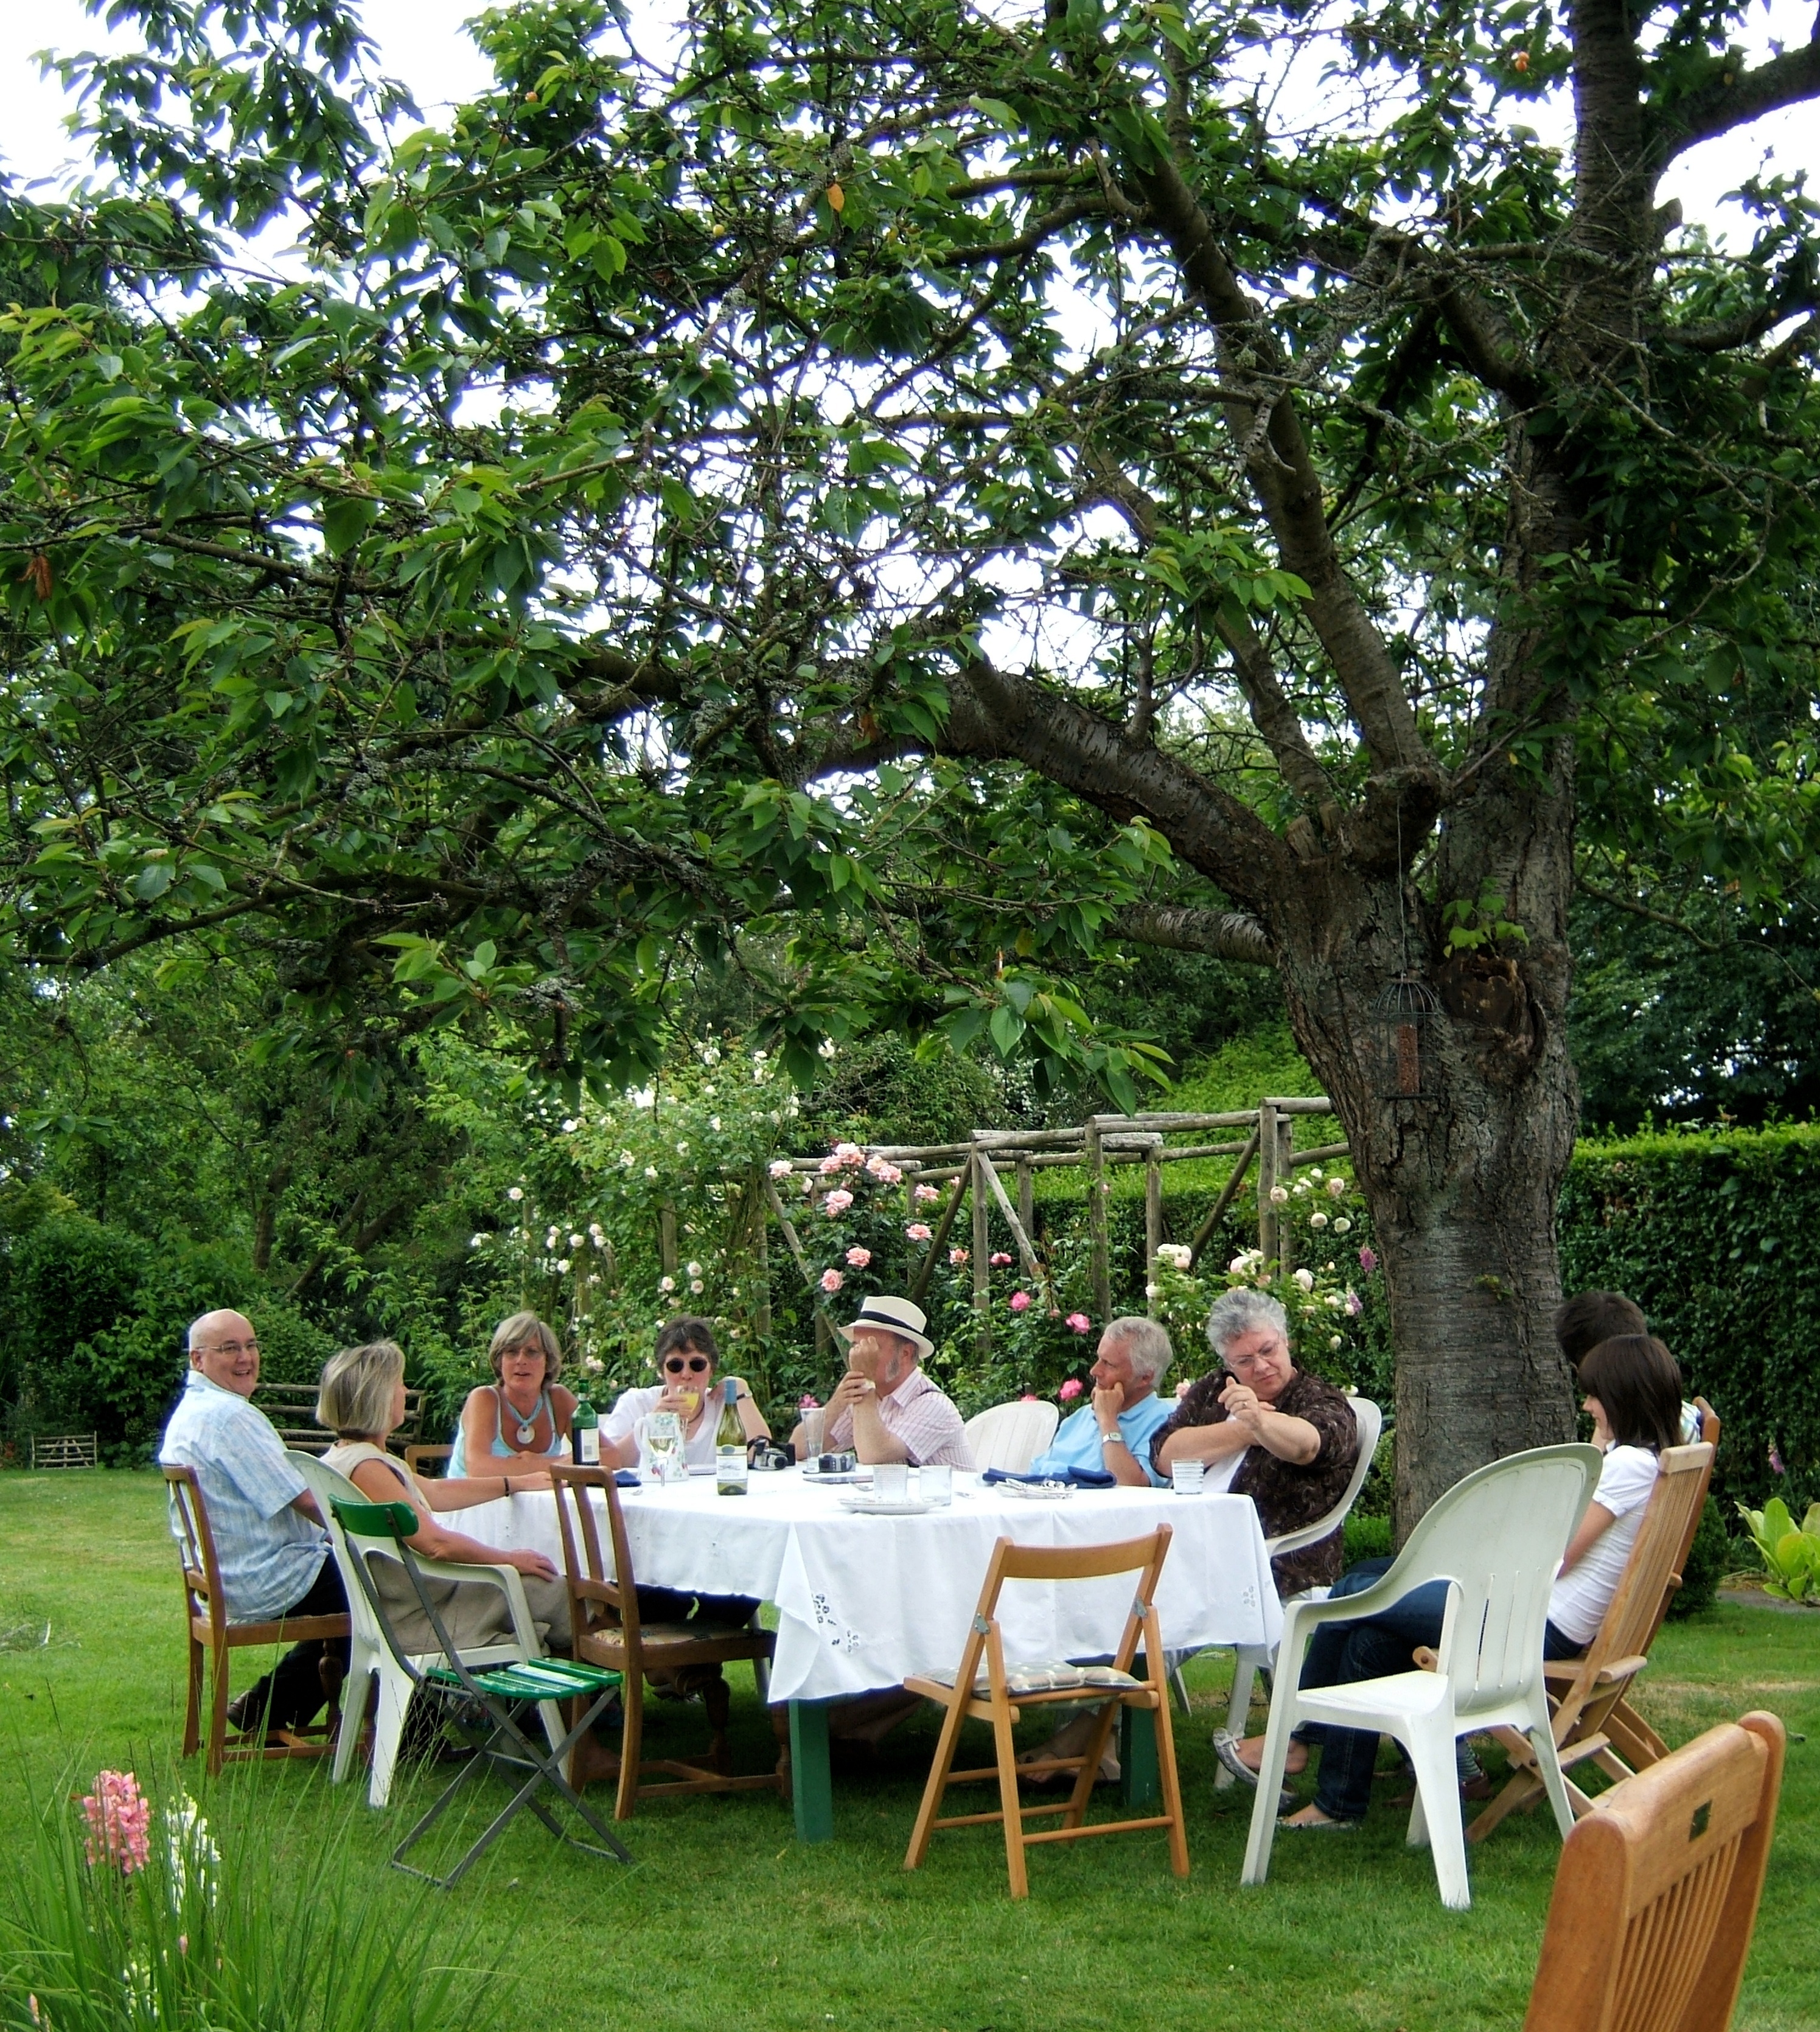 Family enjoying an alfresco dining in the garden